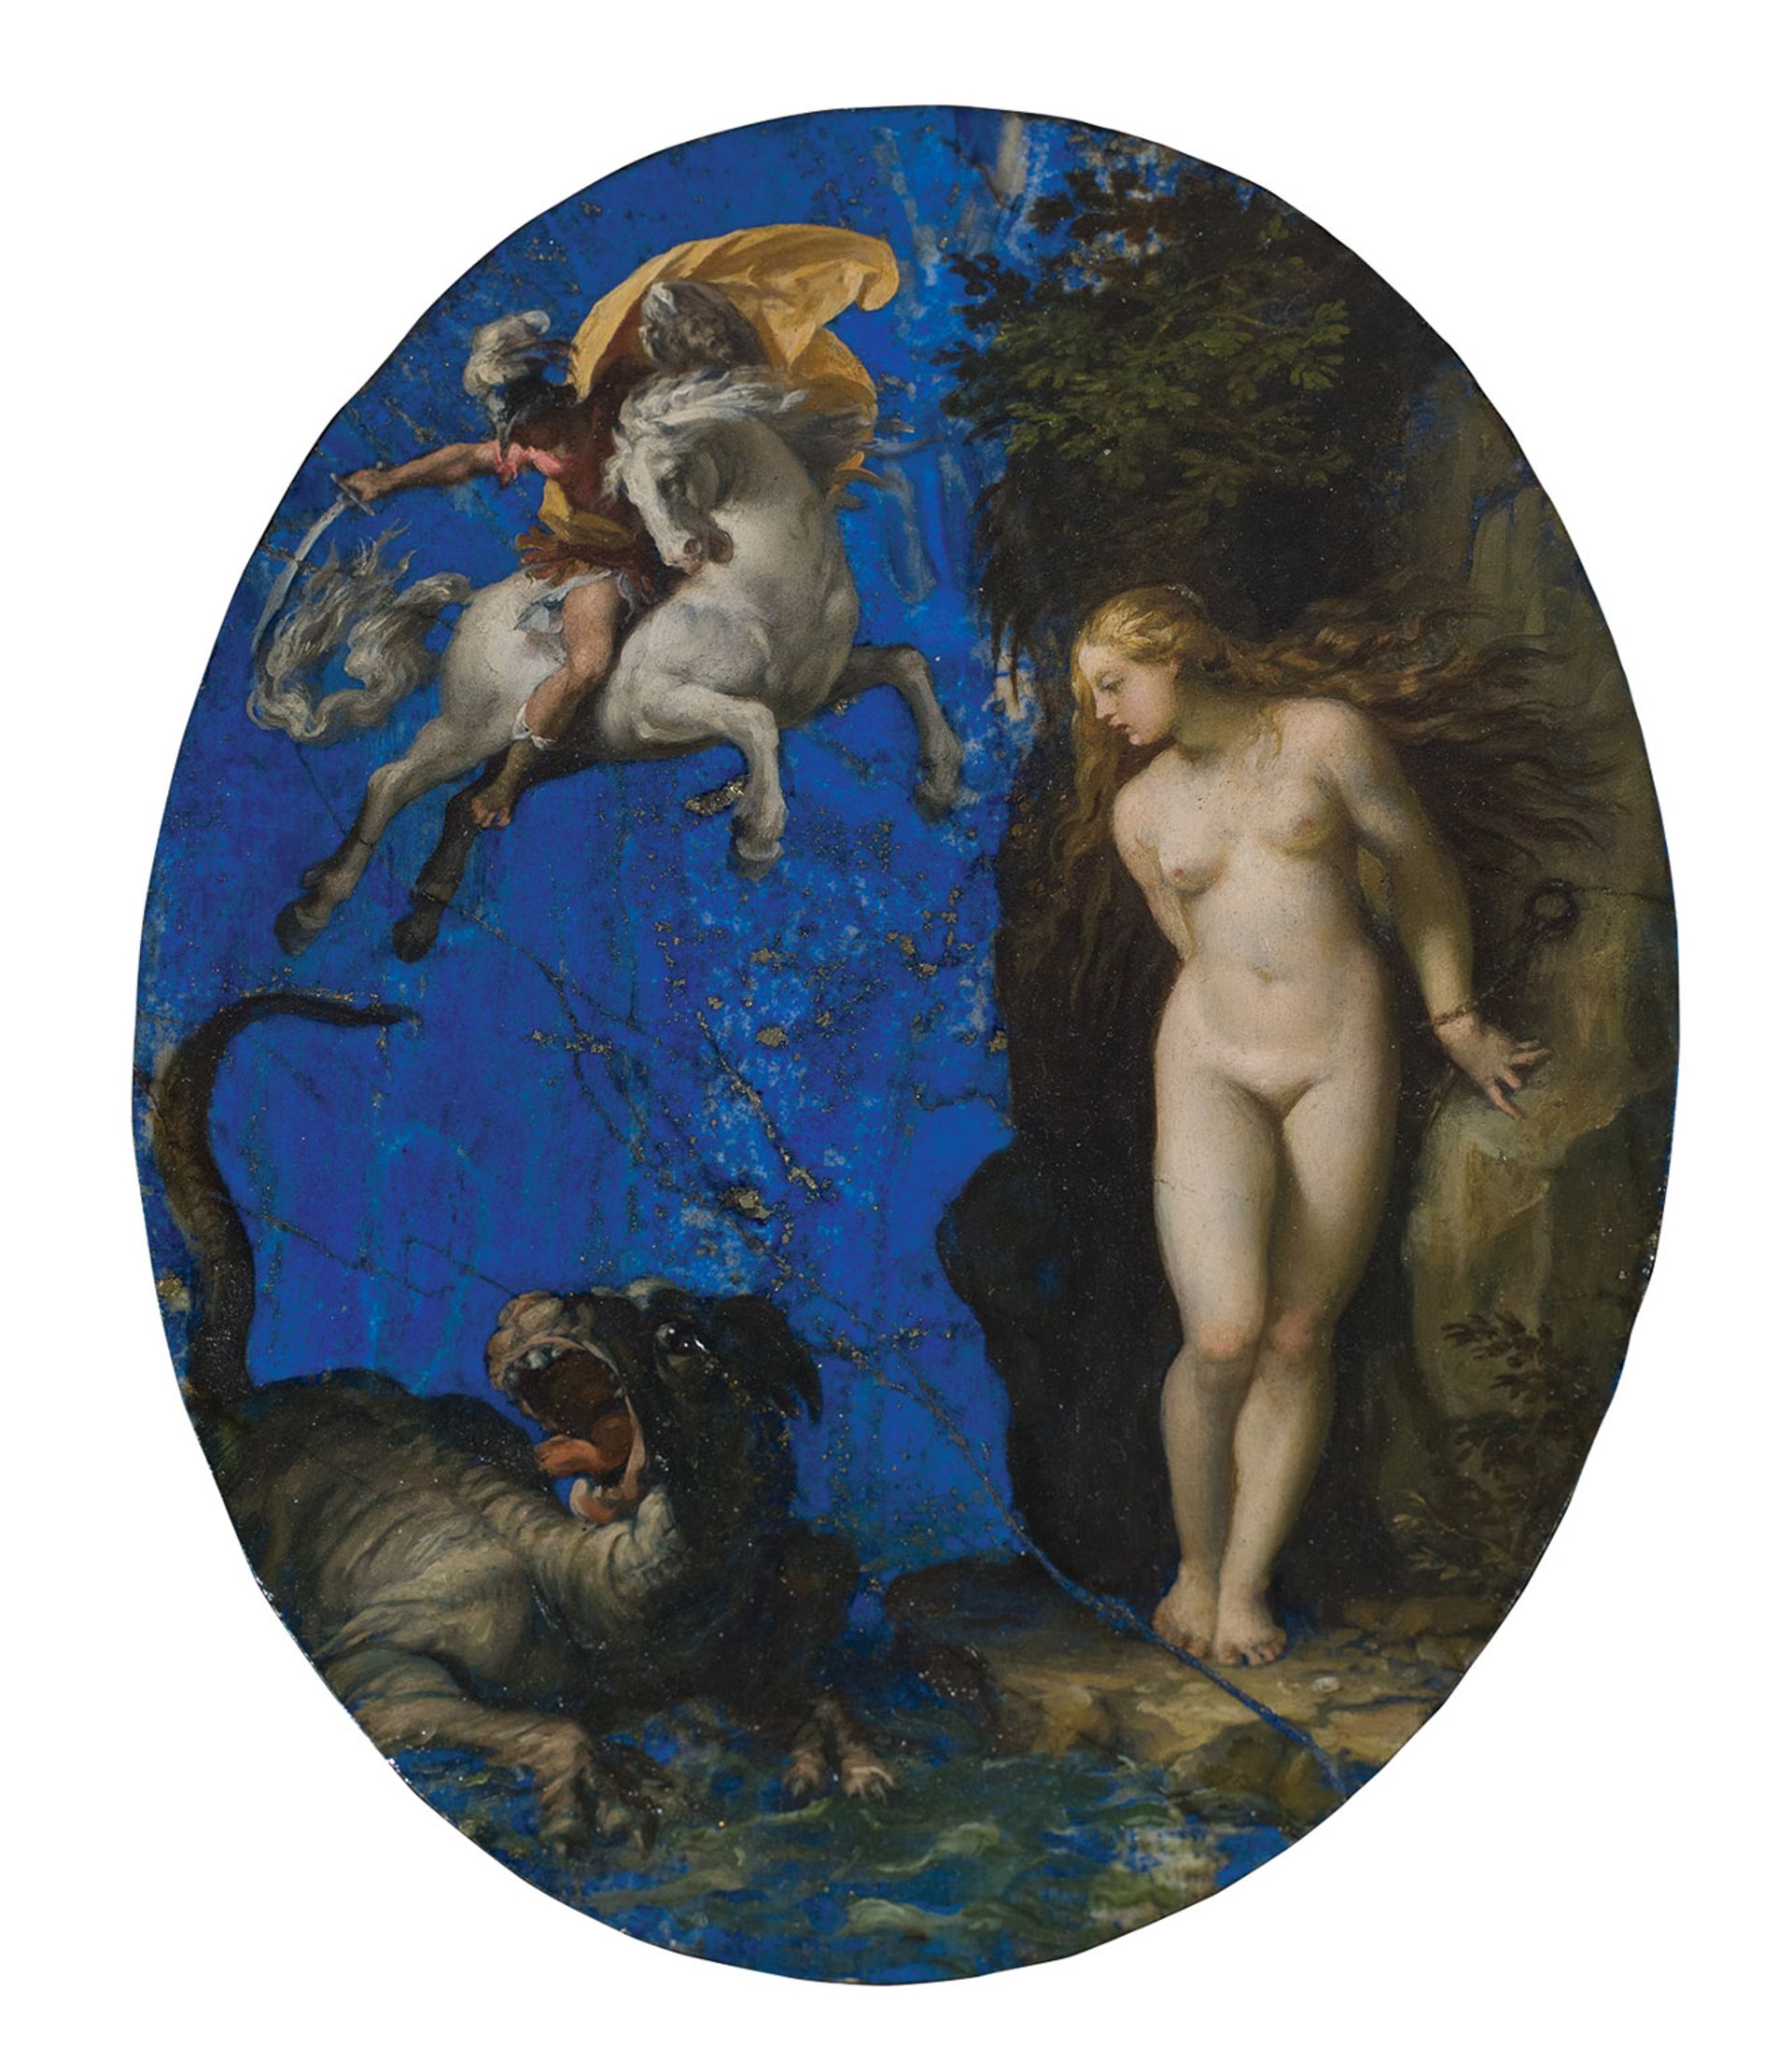 Giuseppe Cesari’s Perseus Rescuing Andromeda (around 1593-94) is painted on lapis lazuli Saint Louis Art Museum